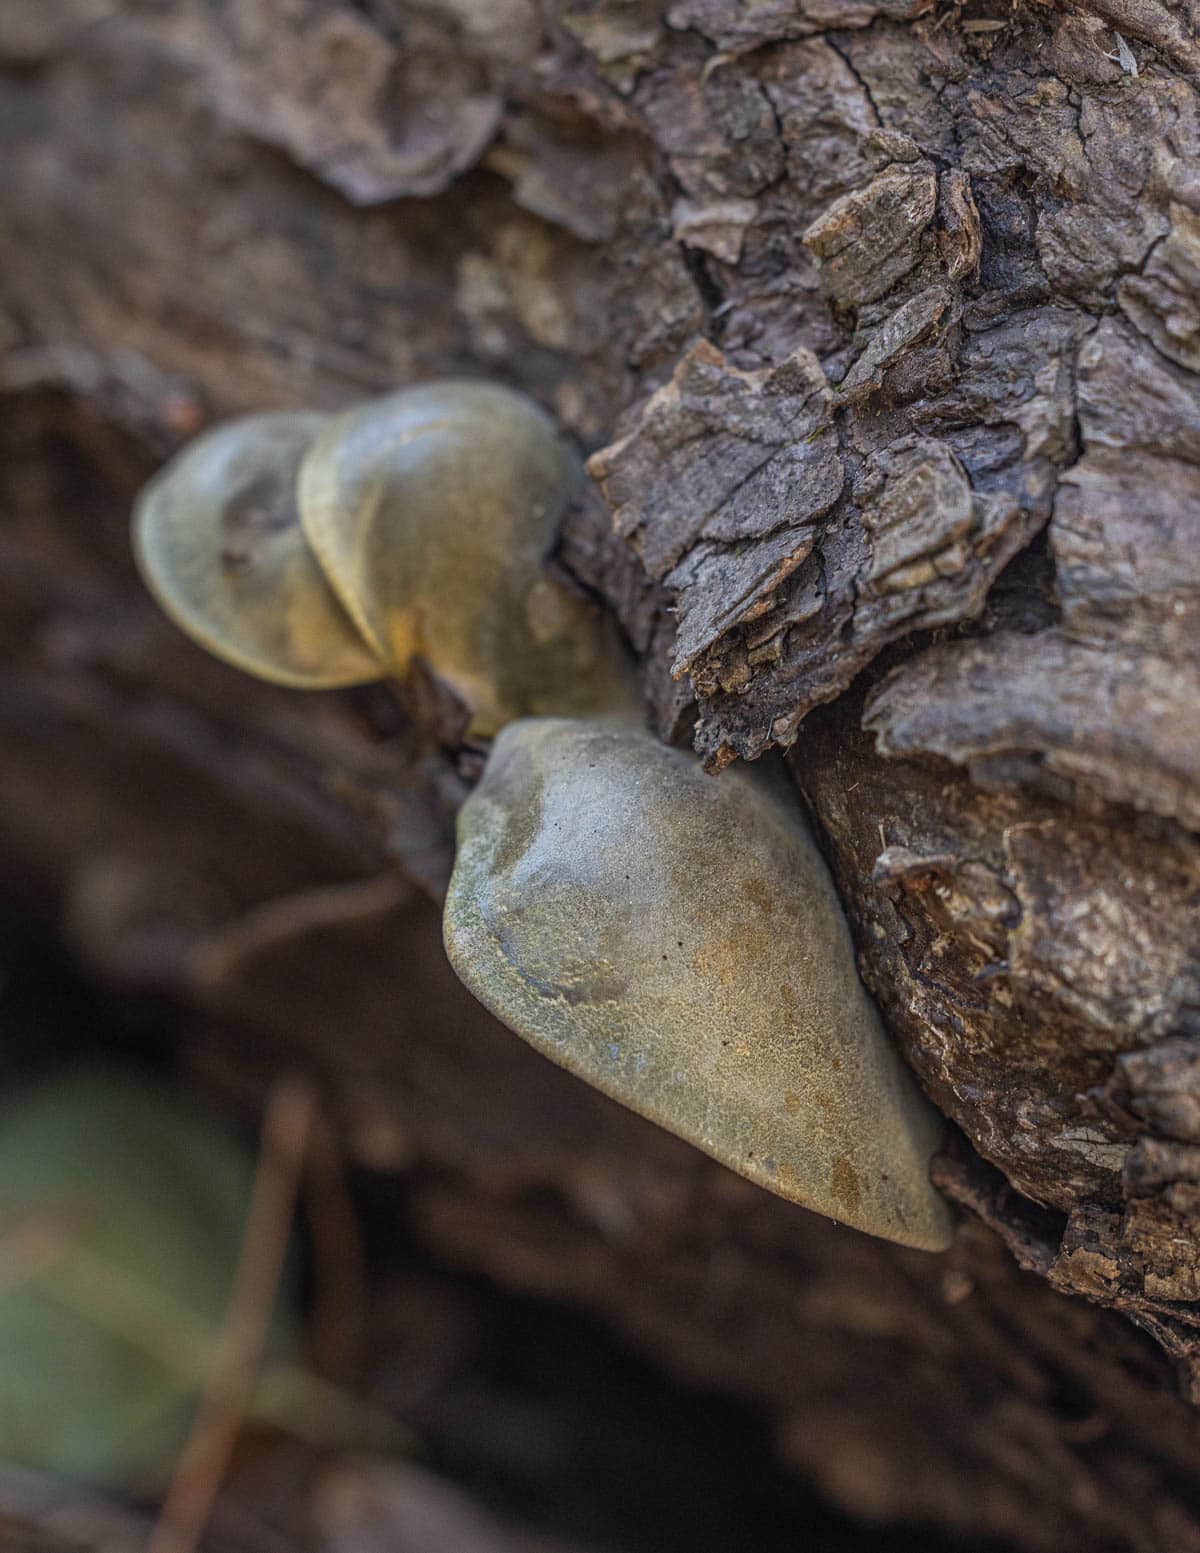 fall oyster mushrooms with green caps (Sarcomyxa serotina) growing on a fallen log. 